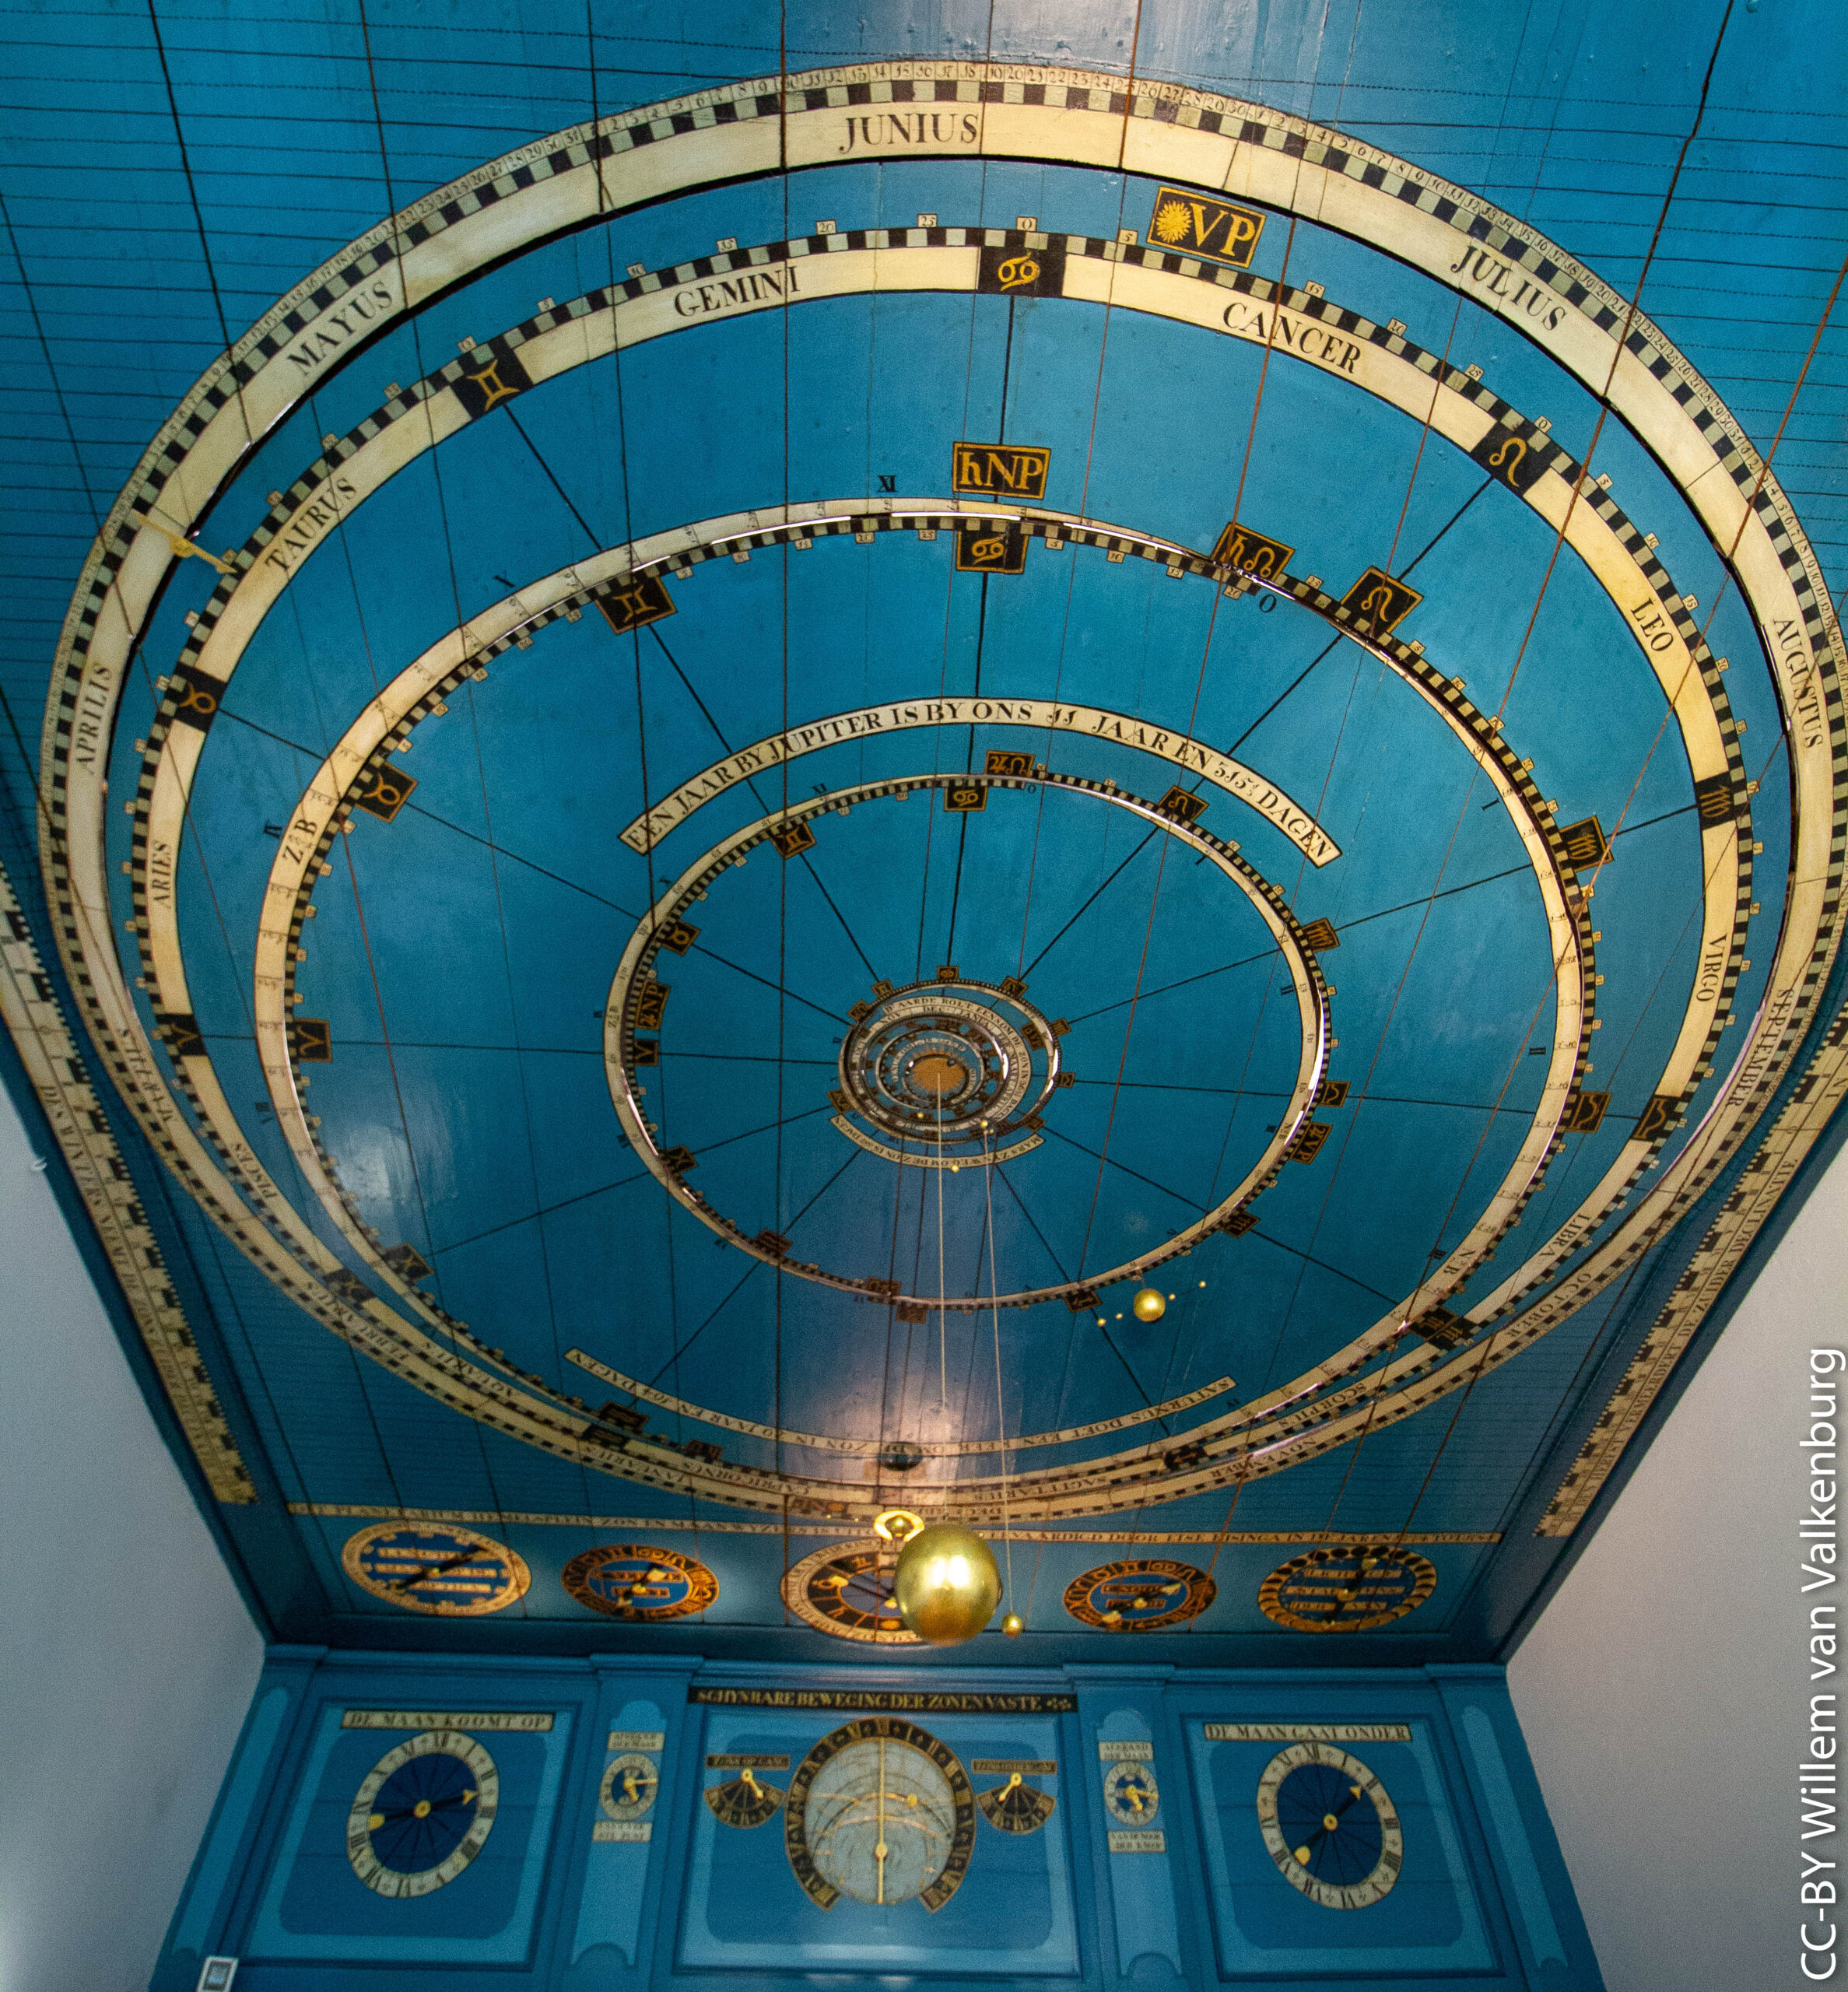 Eise Eisinga Planetarium in Franeker Willem van Valkenburg from Delft, Netherlands, CC BY 2.0, via Wikimedia Commons